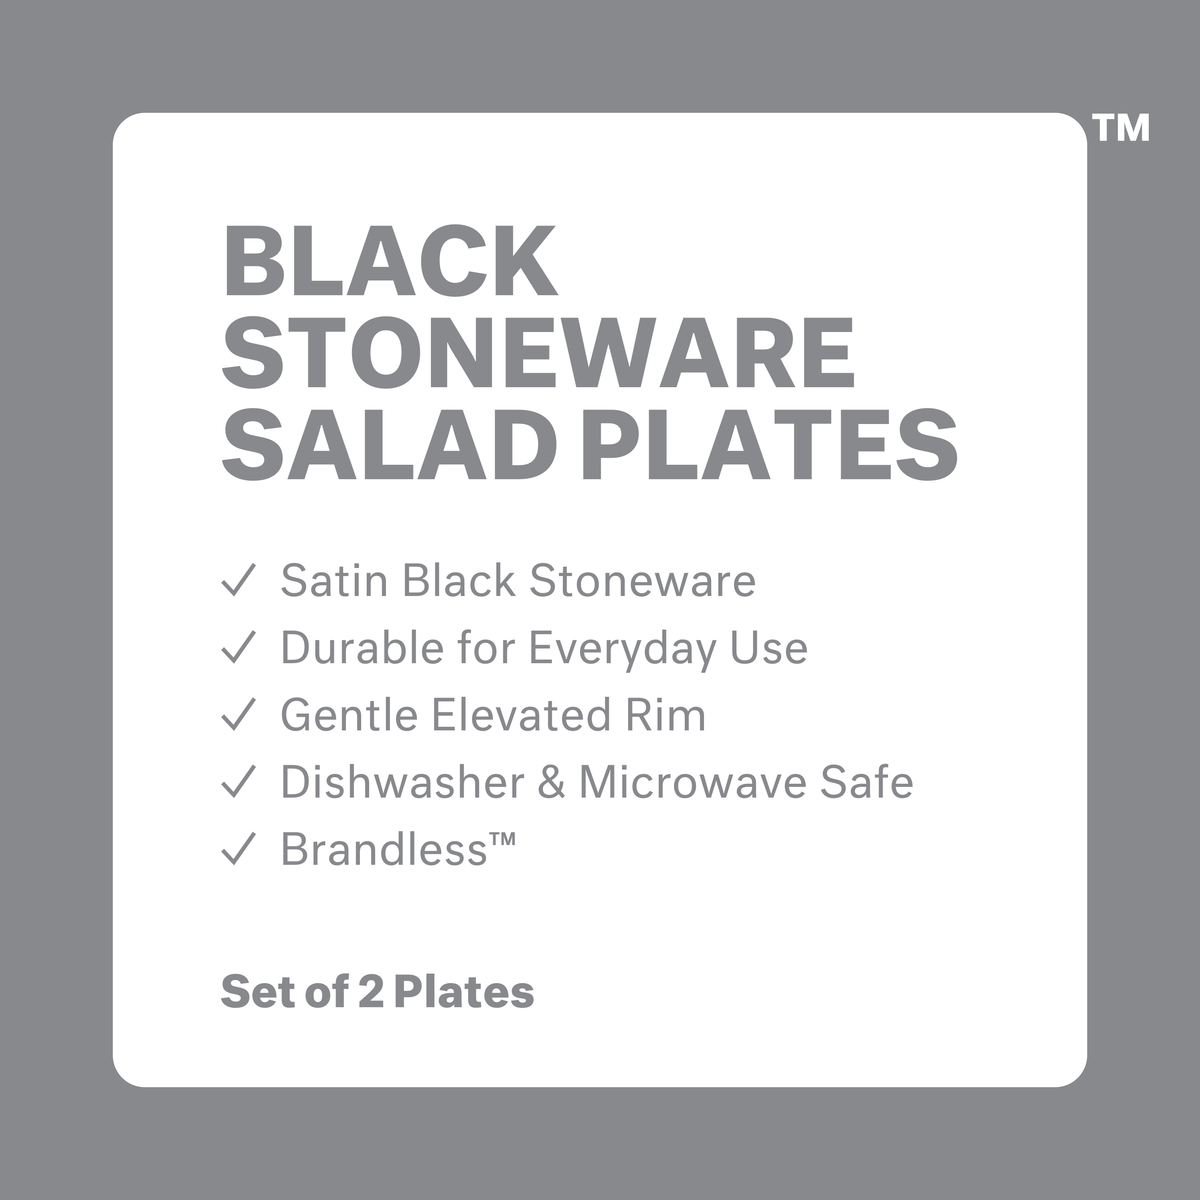 Black stoneware salad plates: satin black stoneware, durable for everyday use, Gentle elevated rim, dishwasher and microwave safe, brandless. Set of 2 plates.